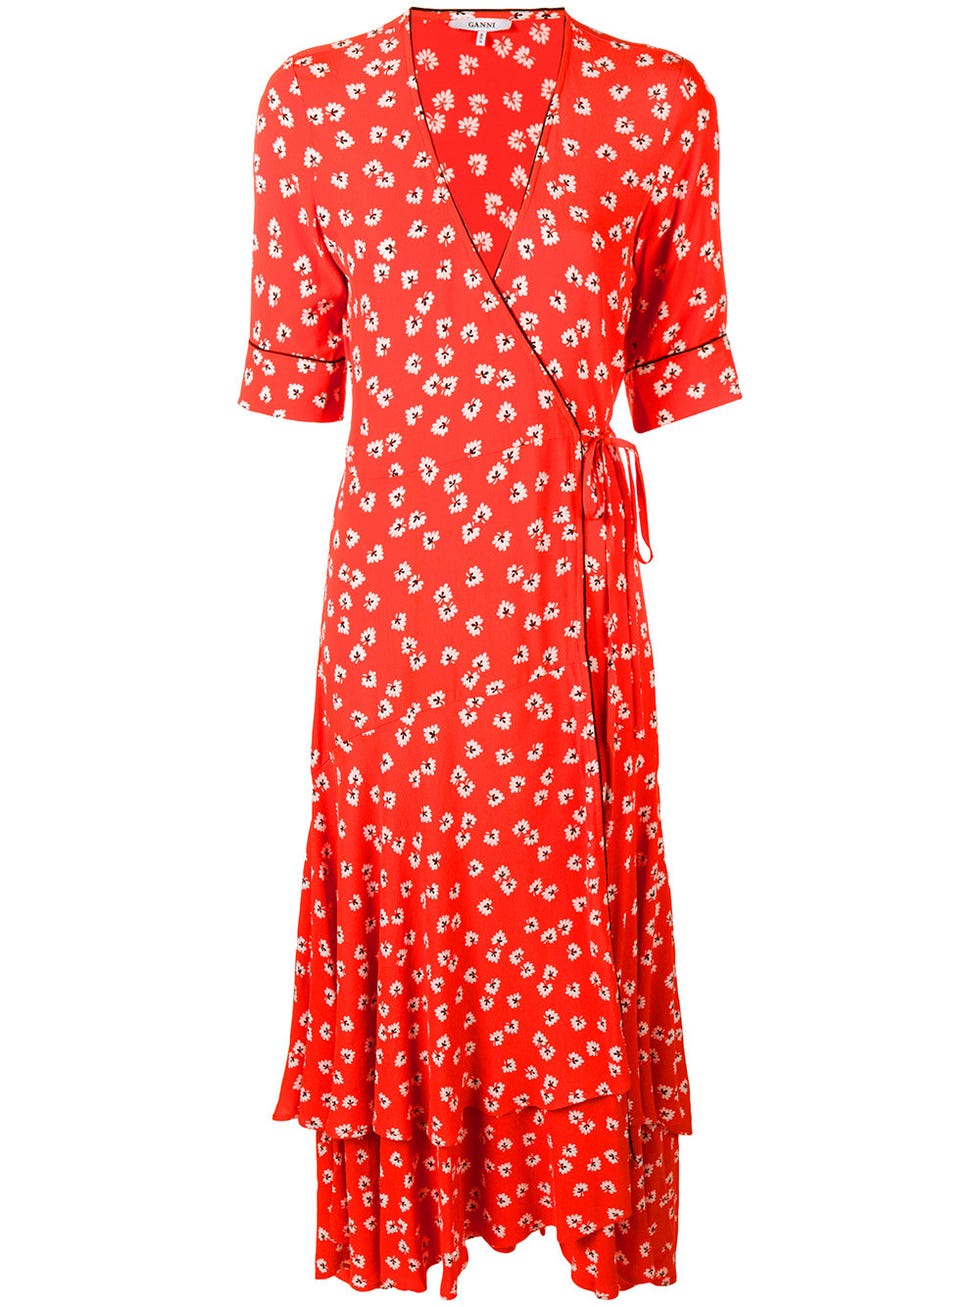 Clothing, Red, Day dress, Dress, Pattern, Polka dot, Orange, Sleeve, Pink, Design, 